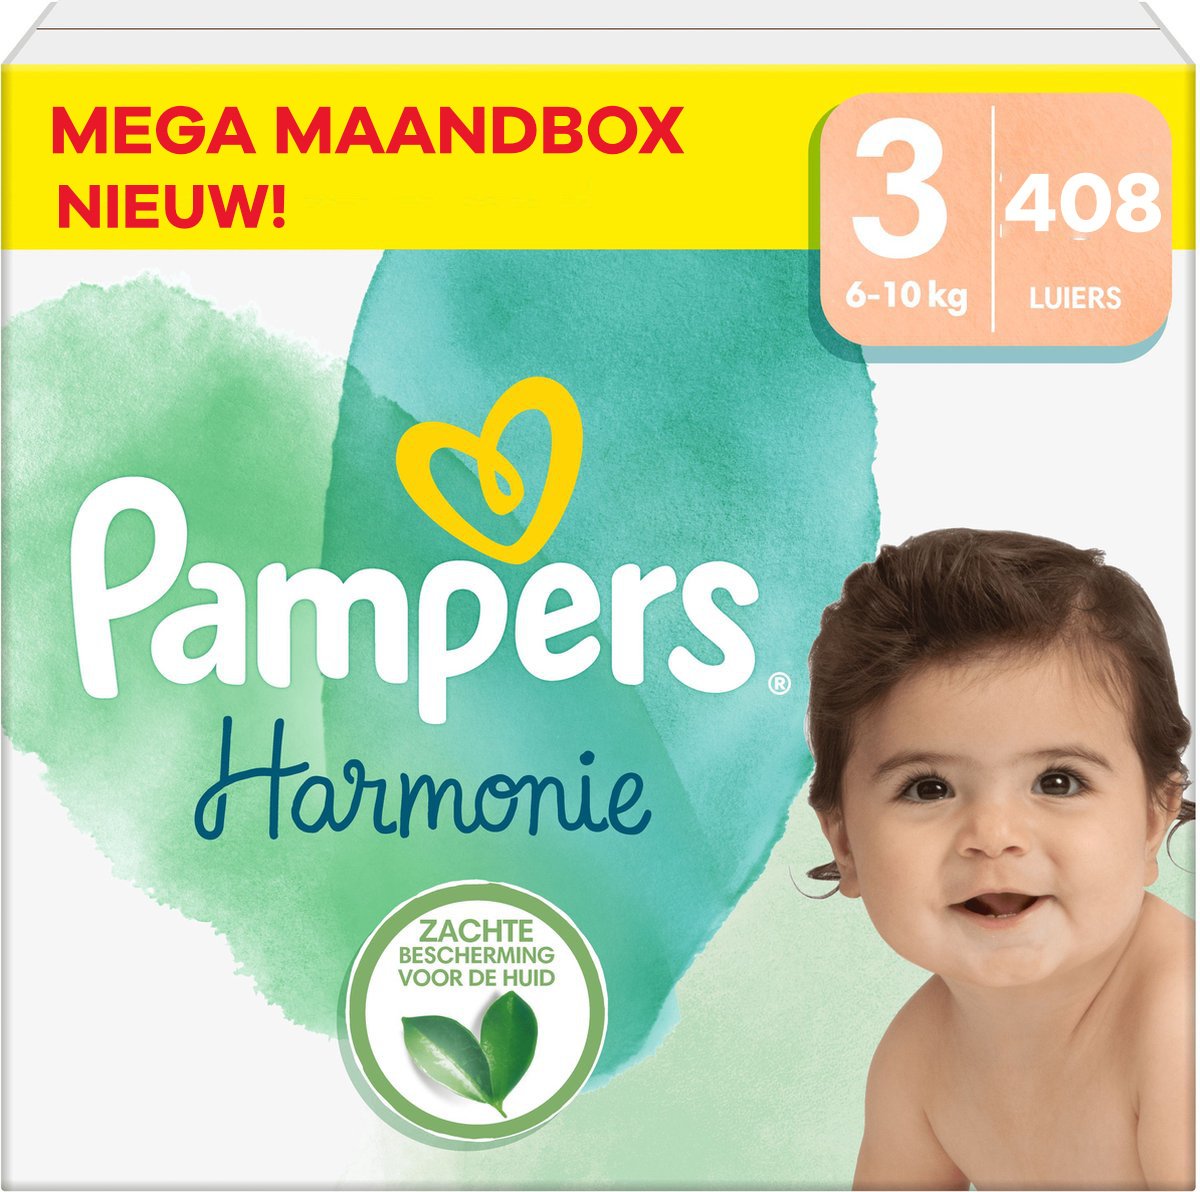 slachtoffers aanbidden Prediken Pampers - Harmonie - Maat 3 - Mega Maandbox - 408 stuks - 6/10 KG -  Babydrogist.nl